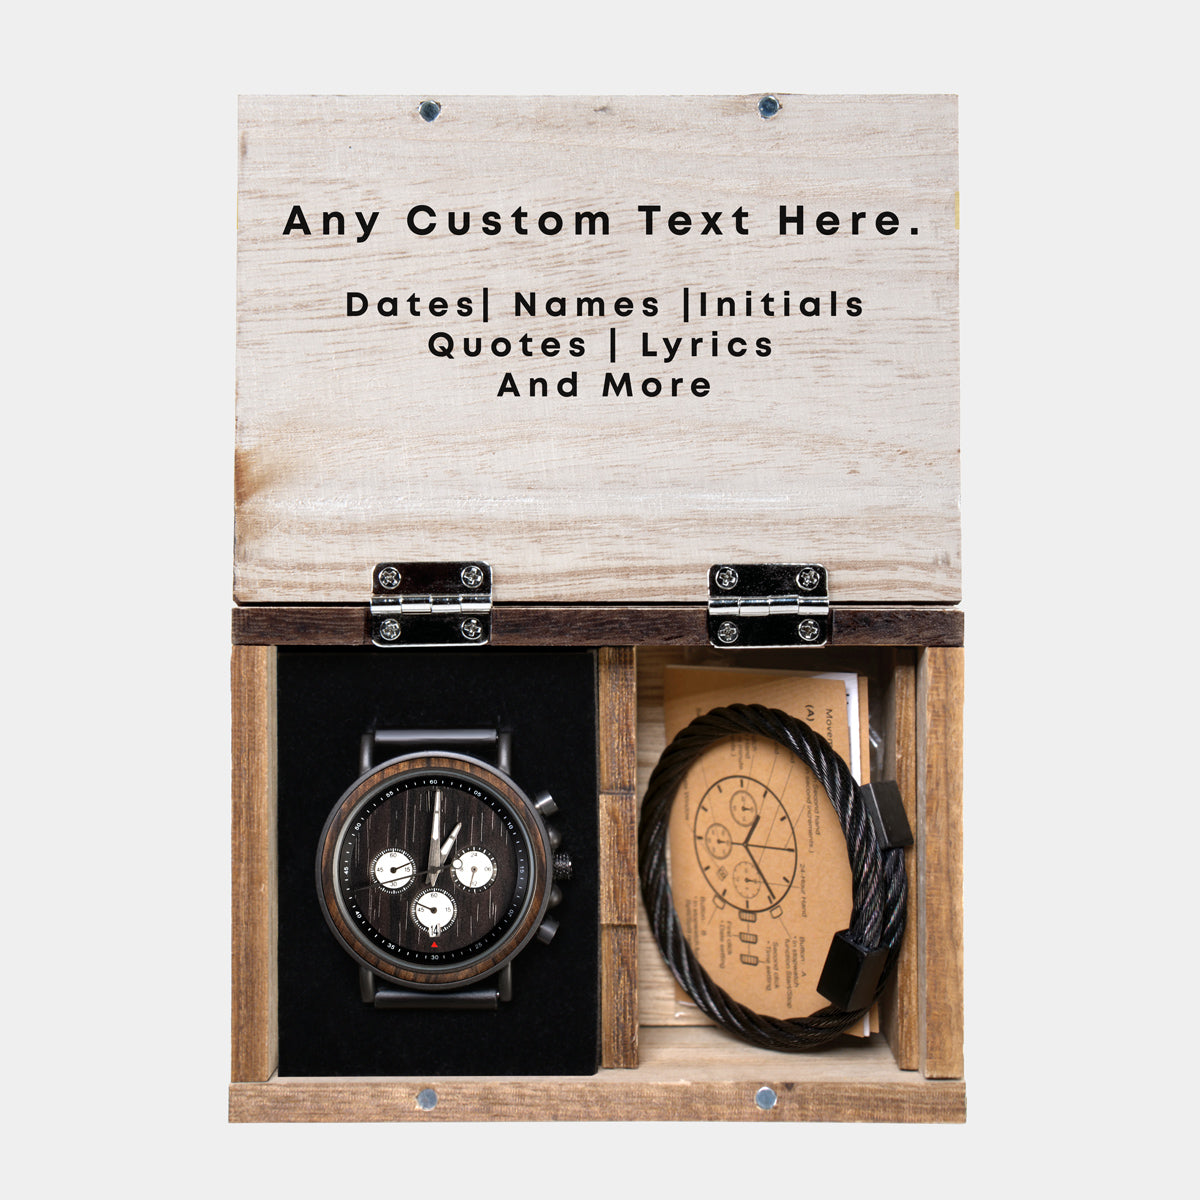 Cincinnati Reds Wooden Wristwatch - Chronograph Black Walnut Watch